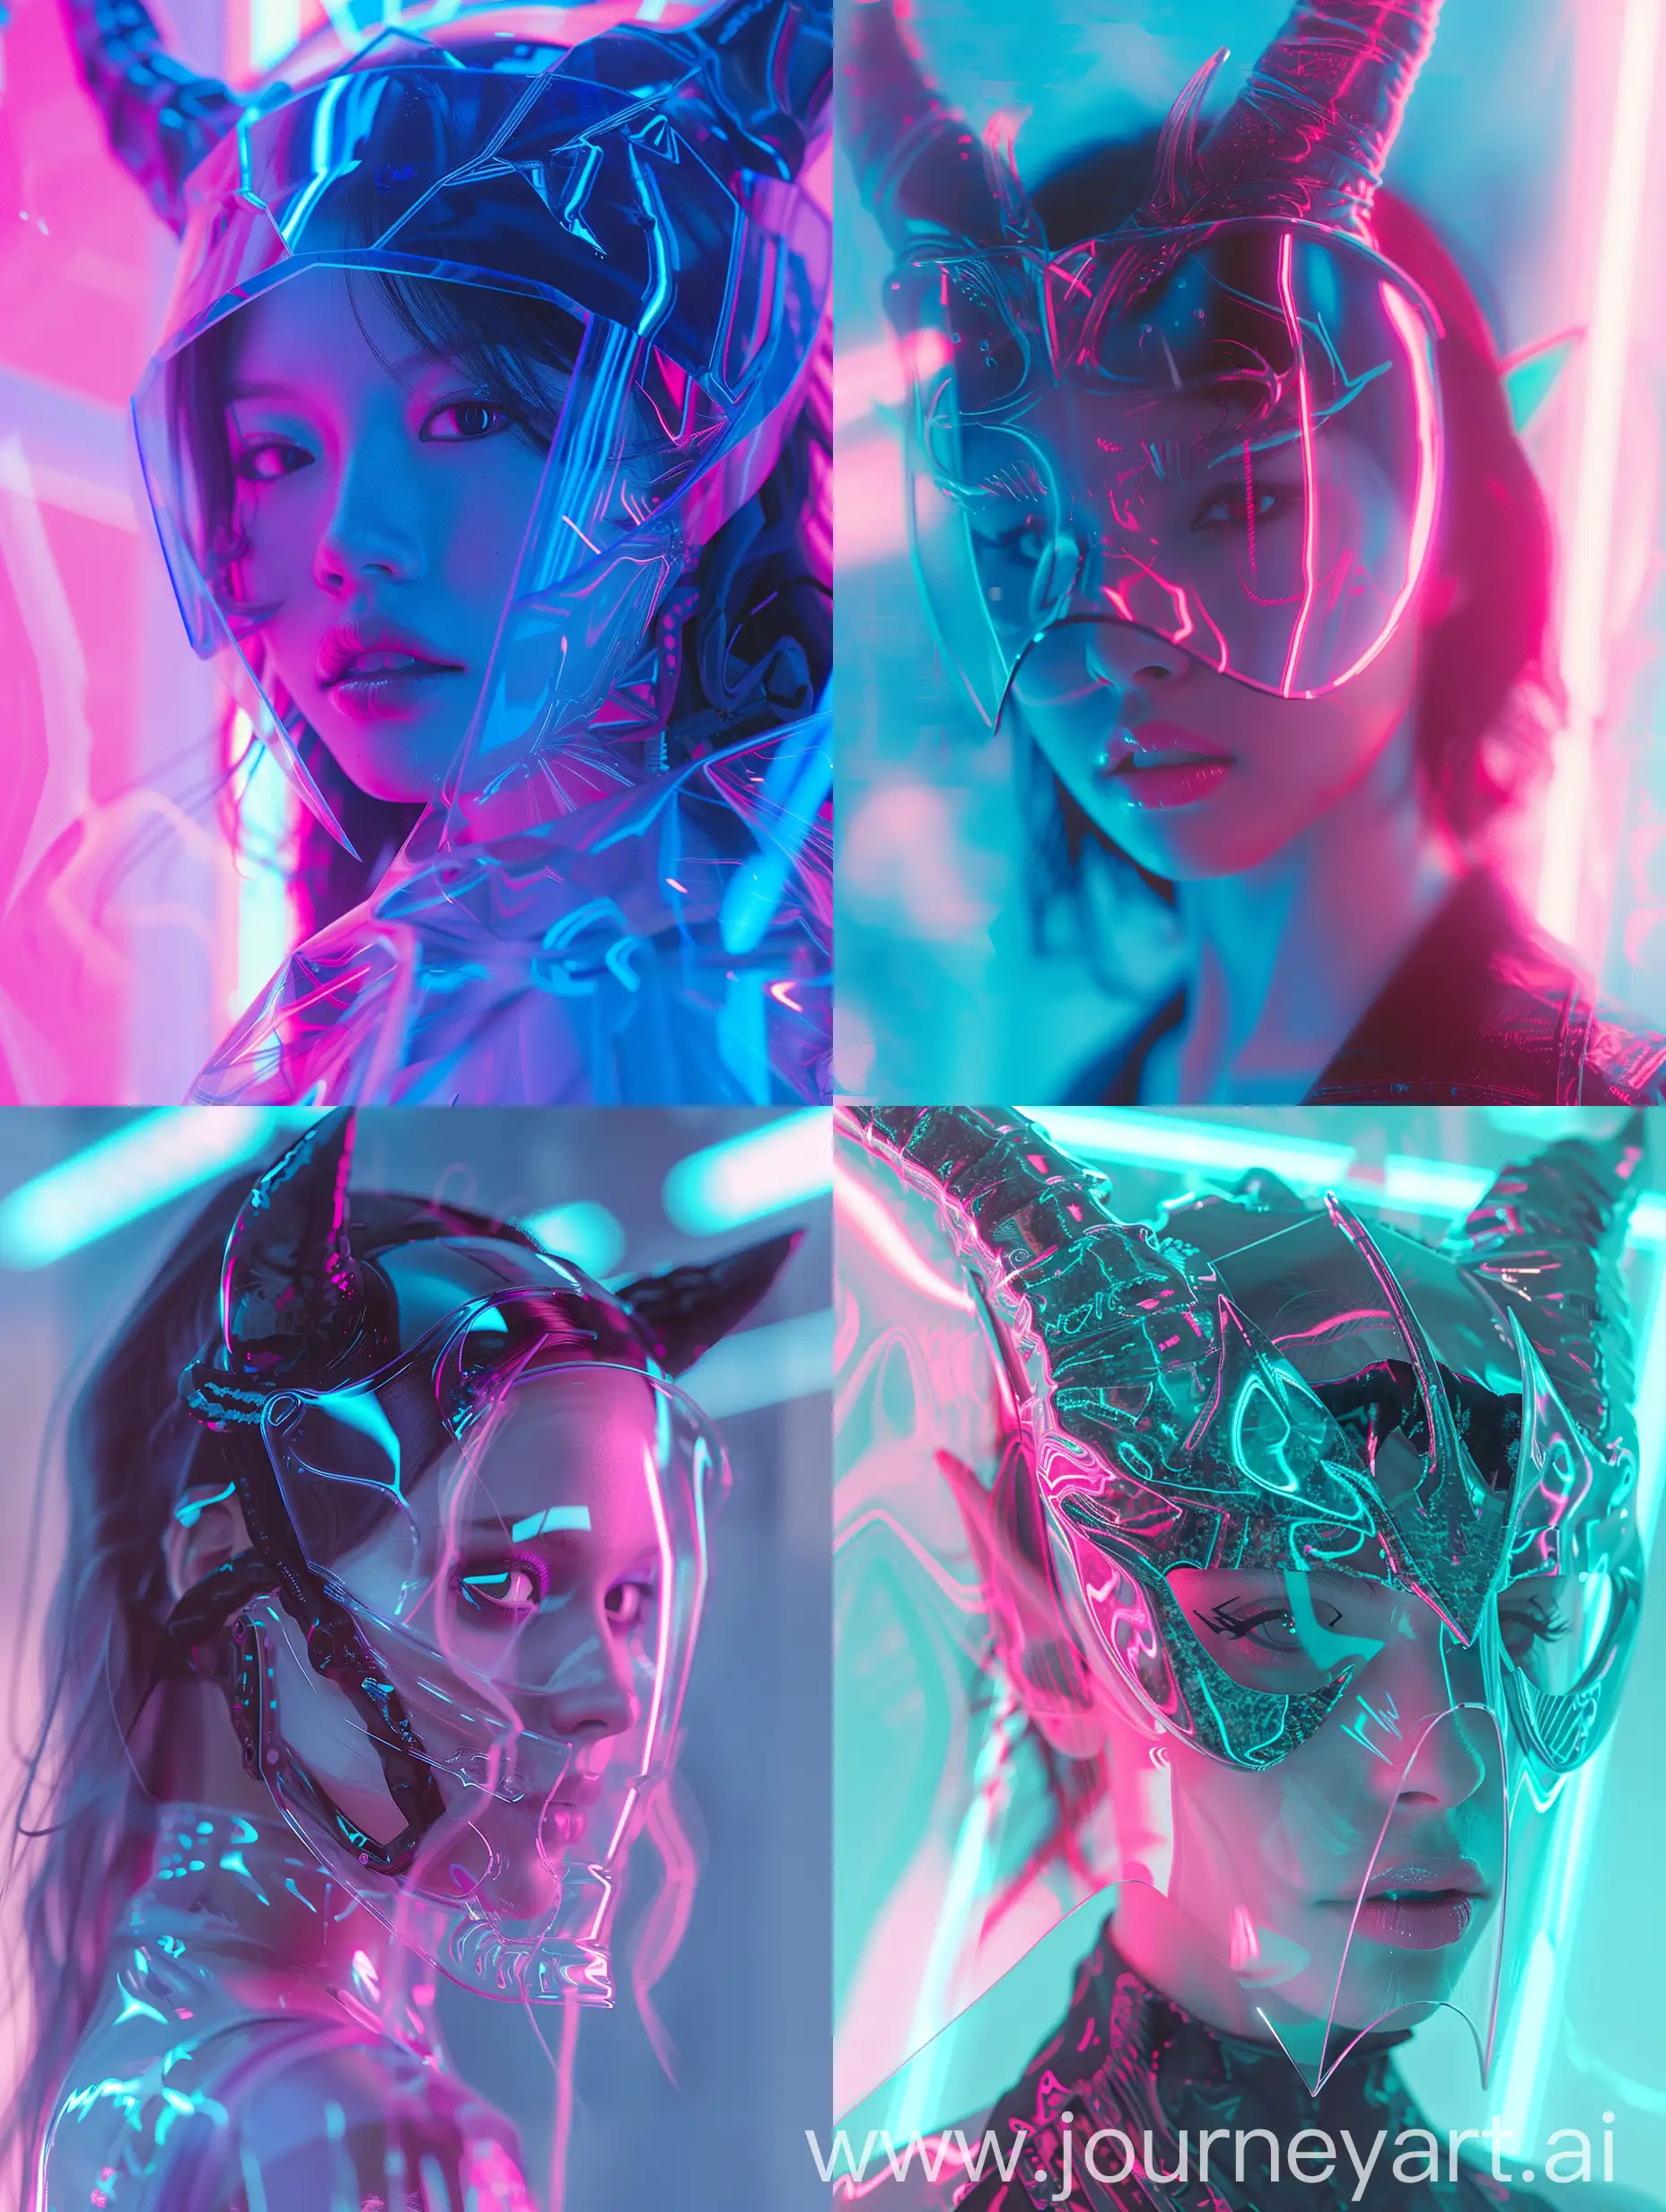 Futuristic-Cyberpunk-Woman-Wearing-Translucent-Demon-Mask-in-Neonlit-Cityscape